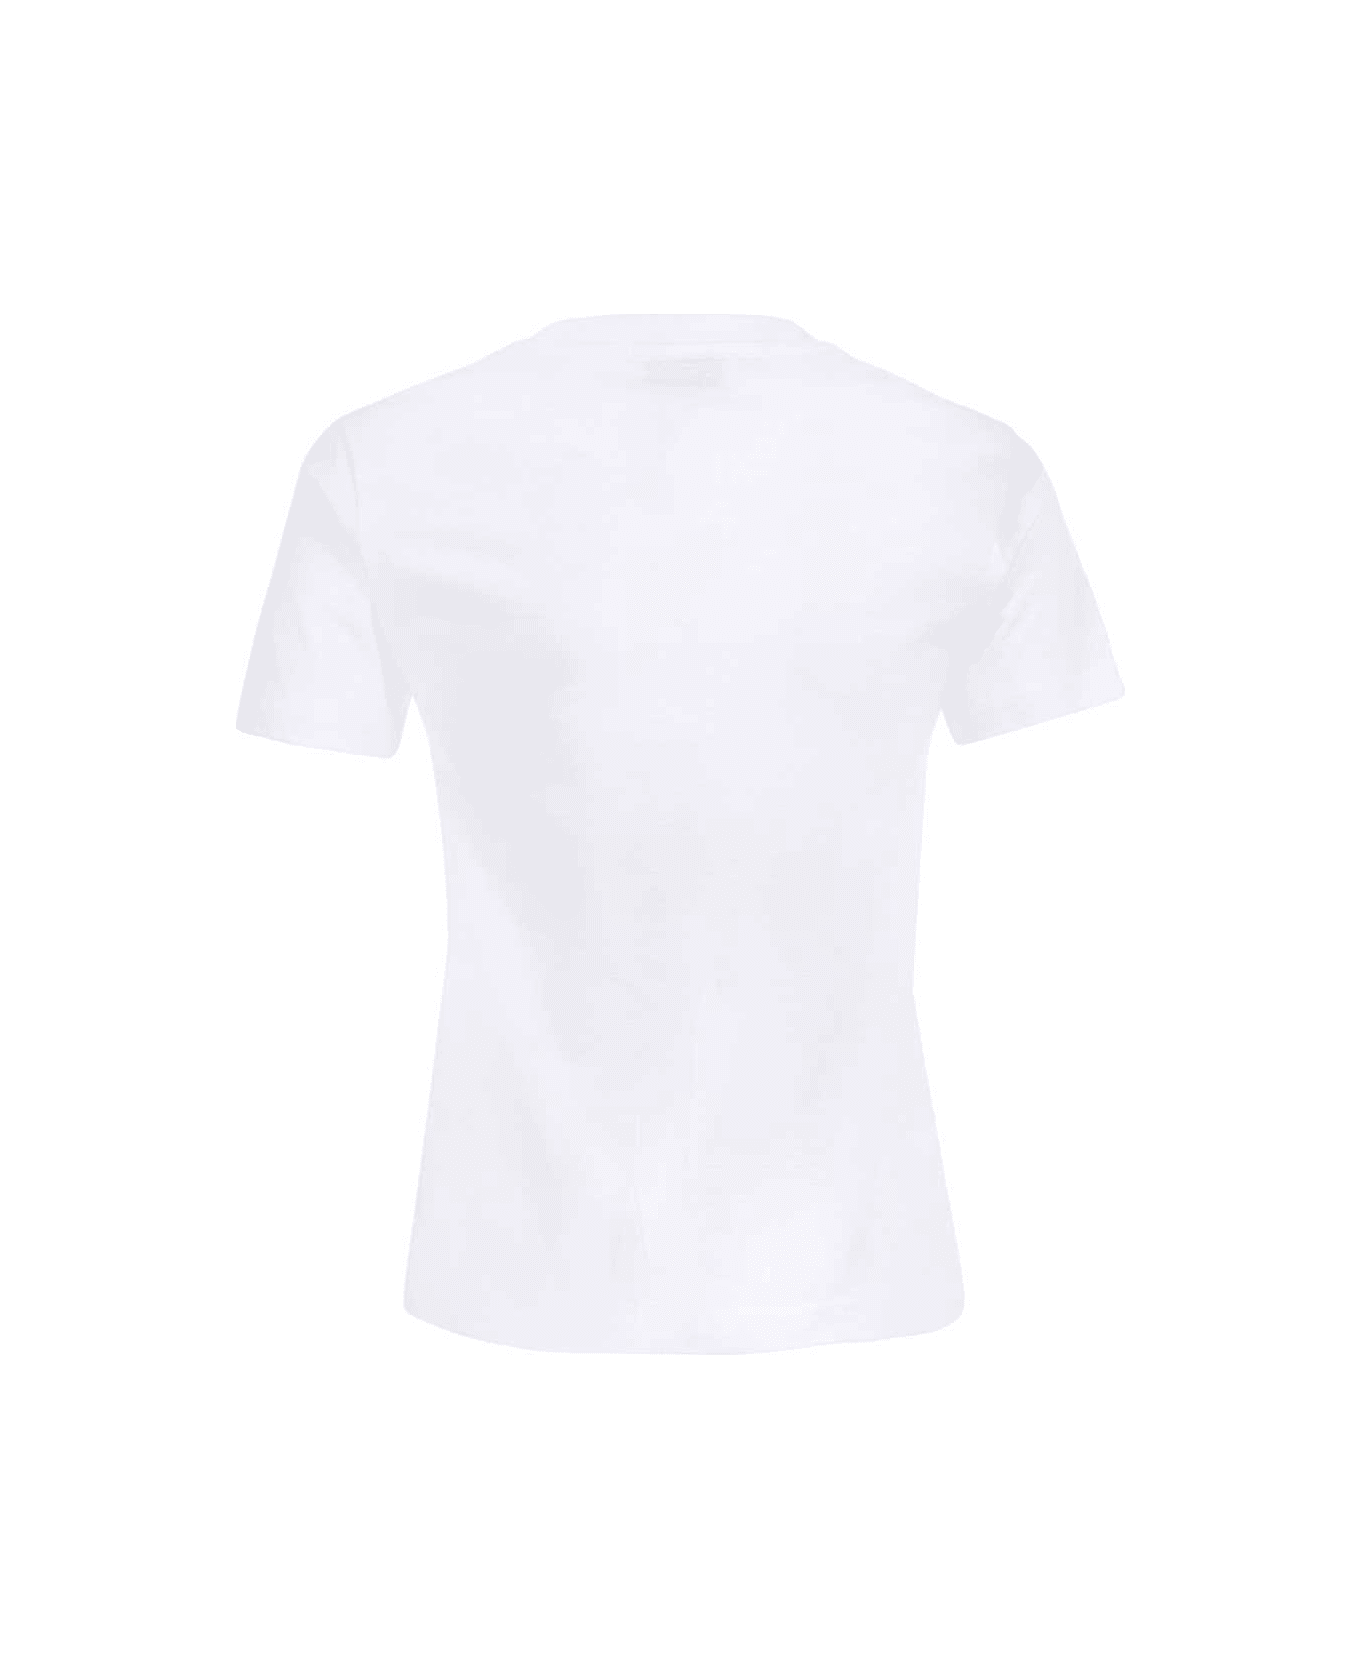 Lanvin Patch Detail Cotton T-shirt - White